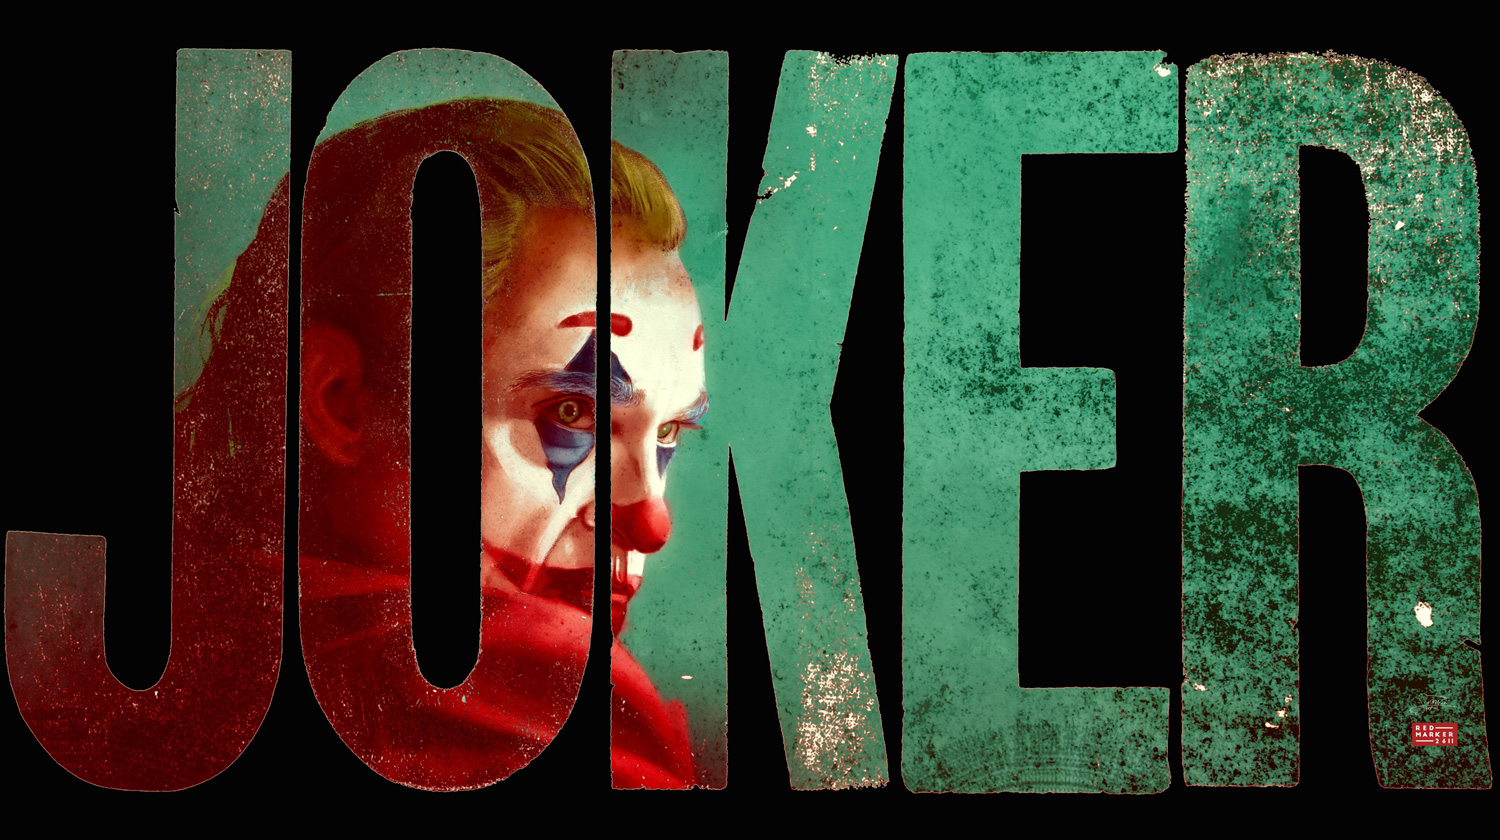 joker-2019-4k-poster-promotional-materials